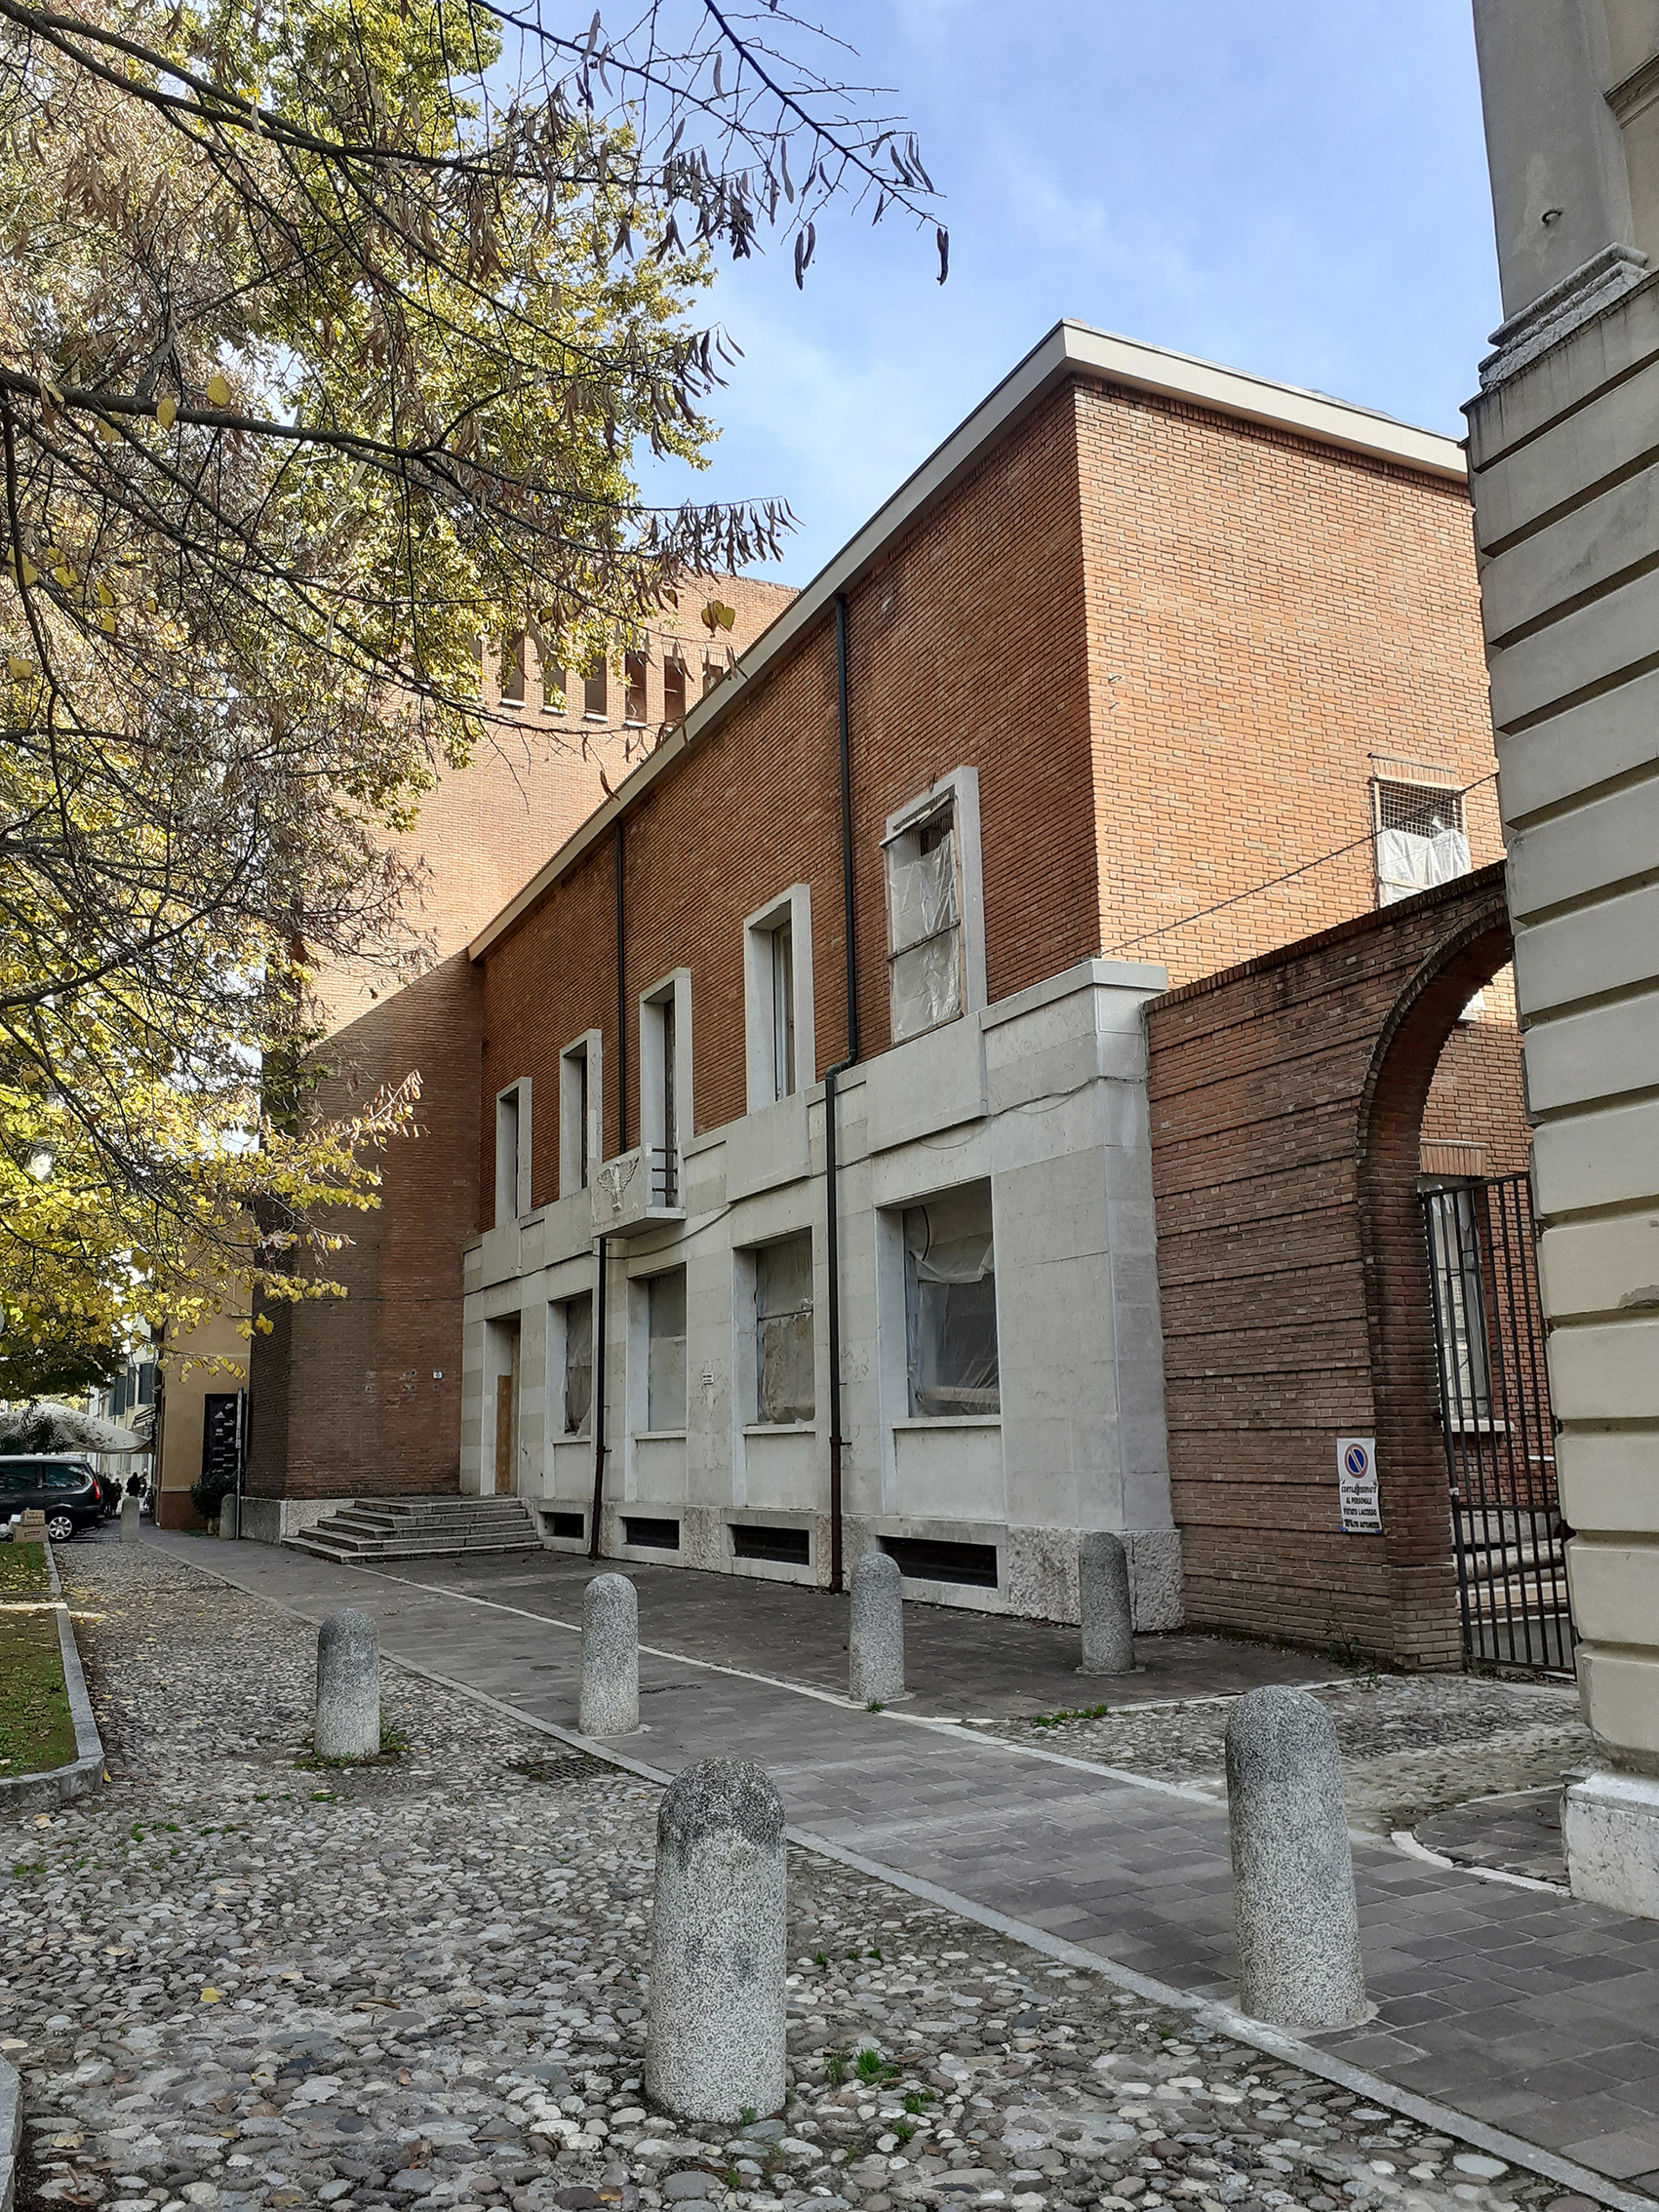 Gruppo Rionale Arnaldo Mussolini (ex) (sede gruppo rionale fascista) - Mantova (MN) 